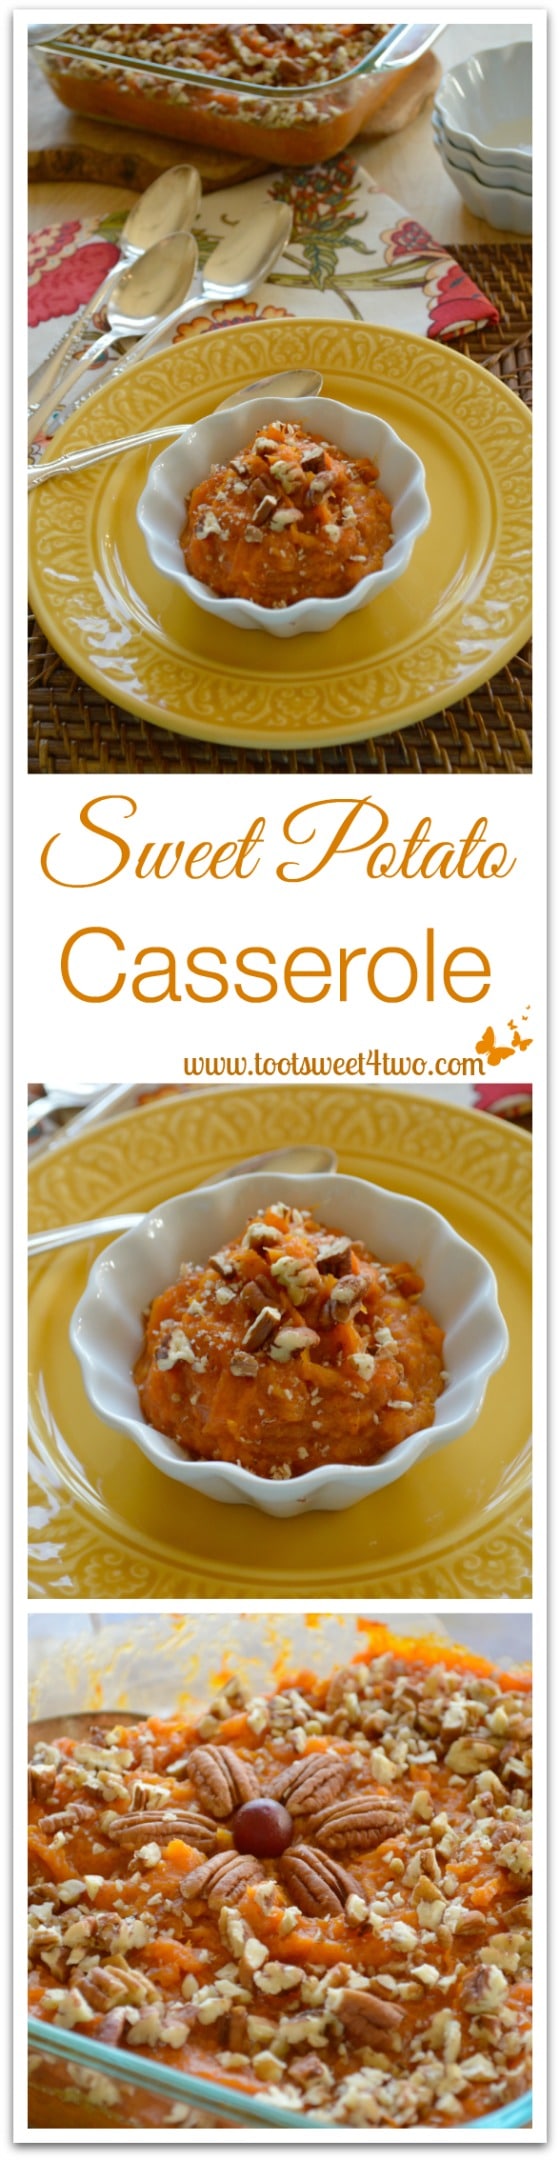 Sweet Potato Casserole collage